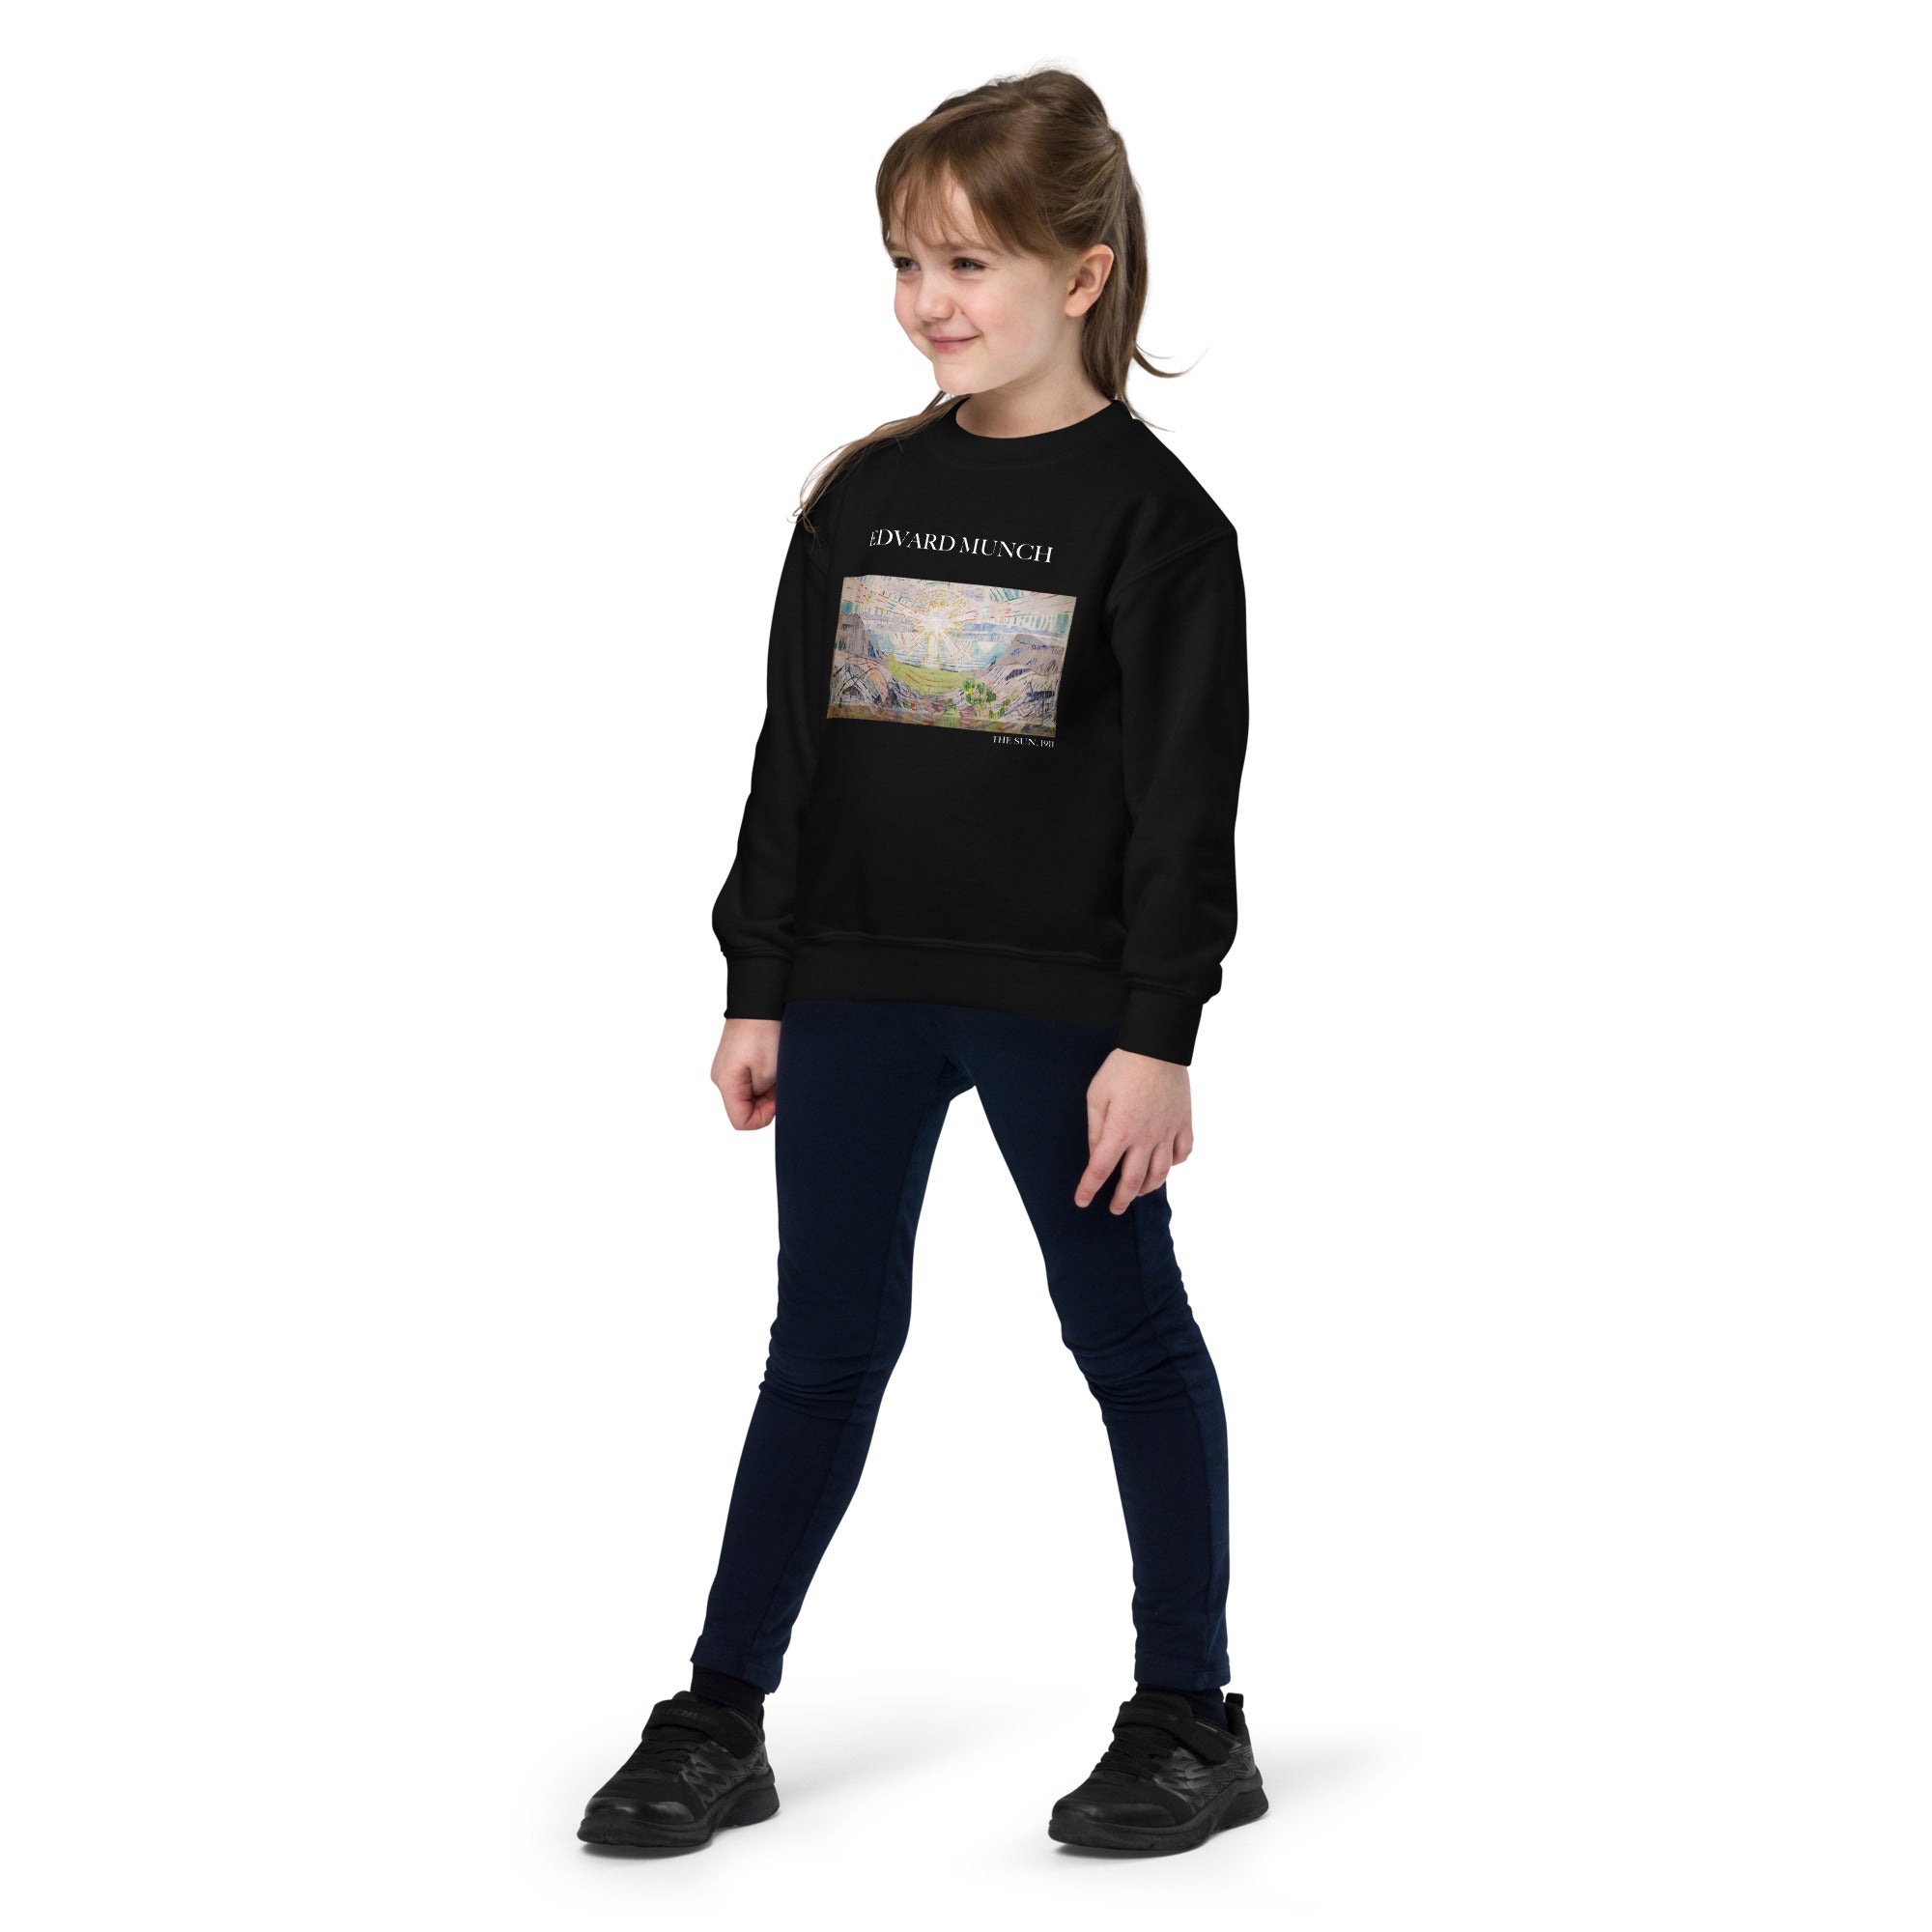 Edvard Munch 'The Sun' Famous Painting Crewneck Sweatshirt | Premium Youth Art Sweatshirt